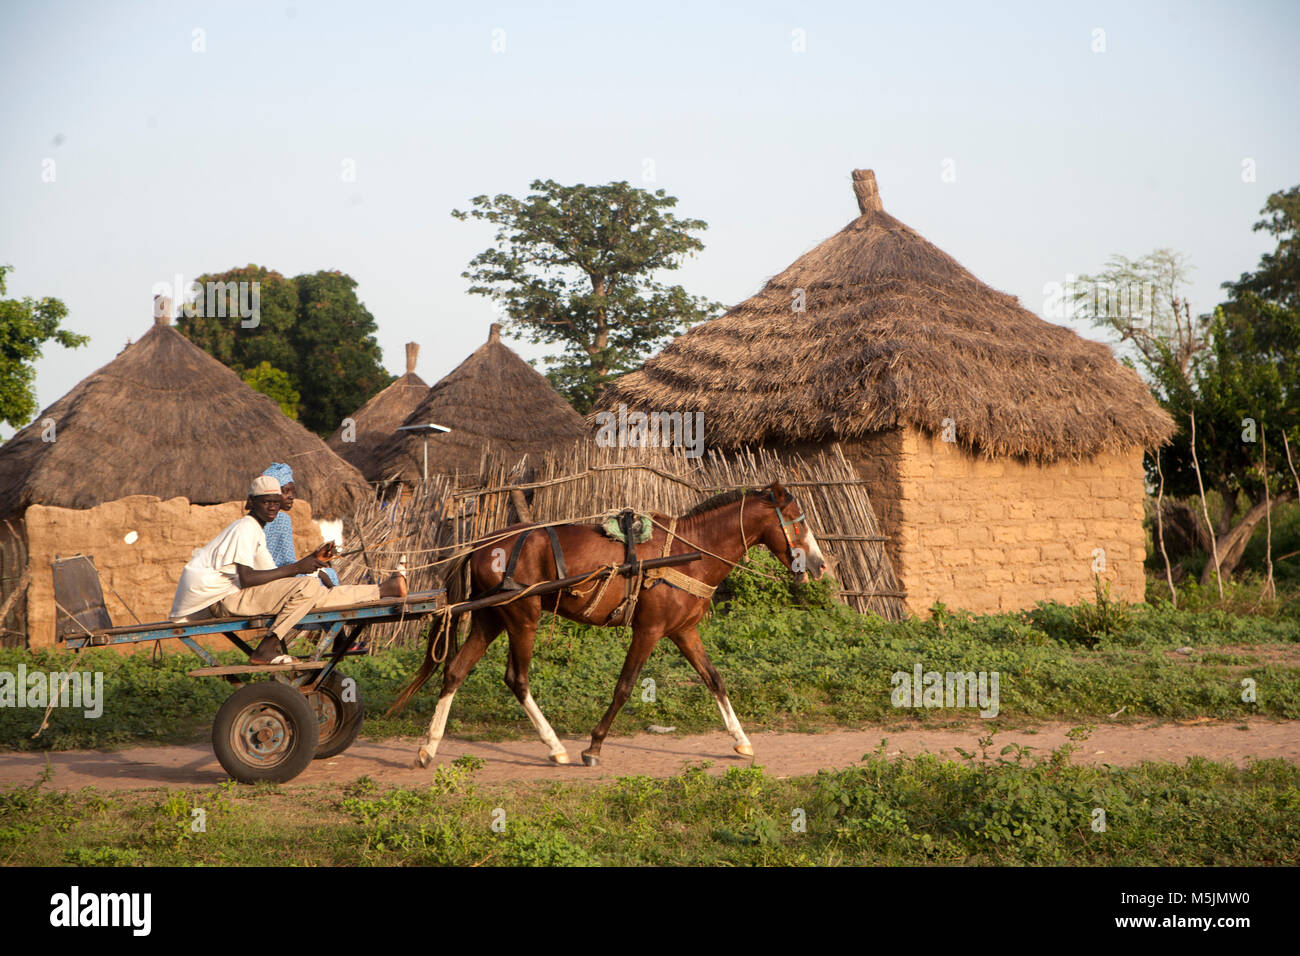 Man drives a horse cart in rural Senegal Stock Photo